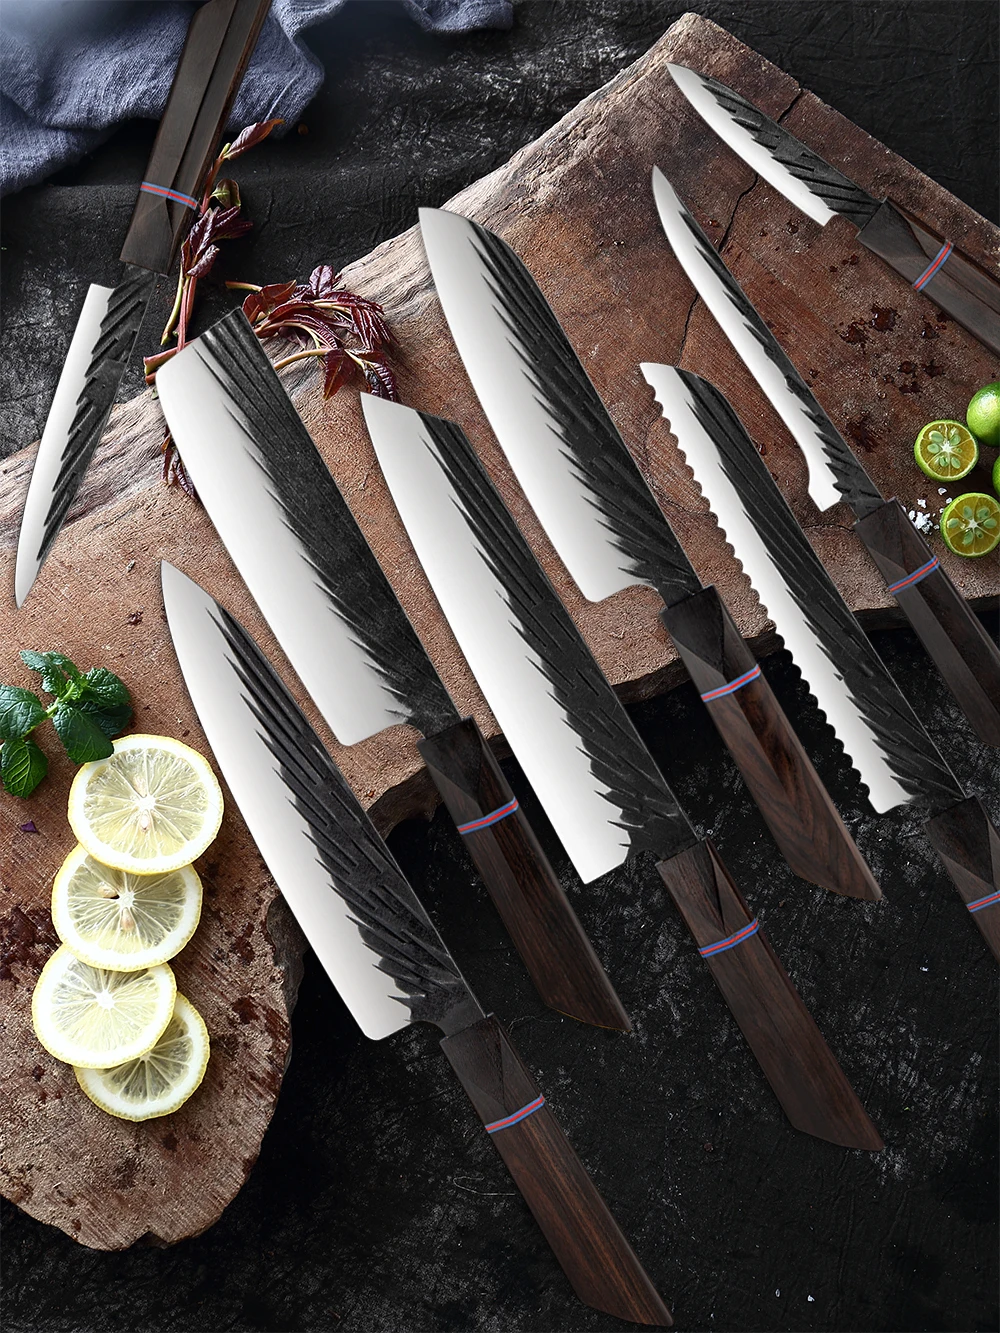 XITUO 8 Sets Kitchen knives Handmade Forged Japanese Sharp Chef Knife 440C Steel Cleaver Kiritsuke Santoku Utility Paring Knife